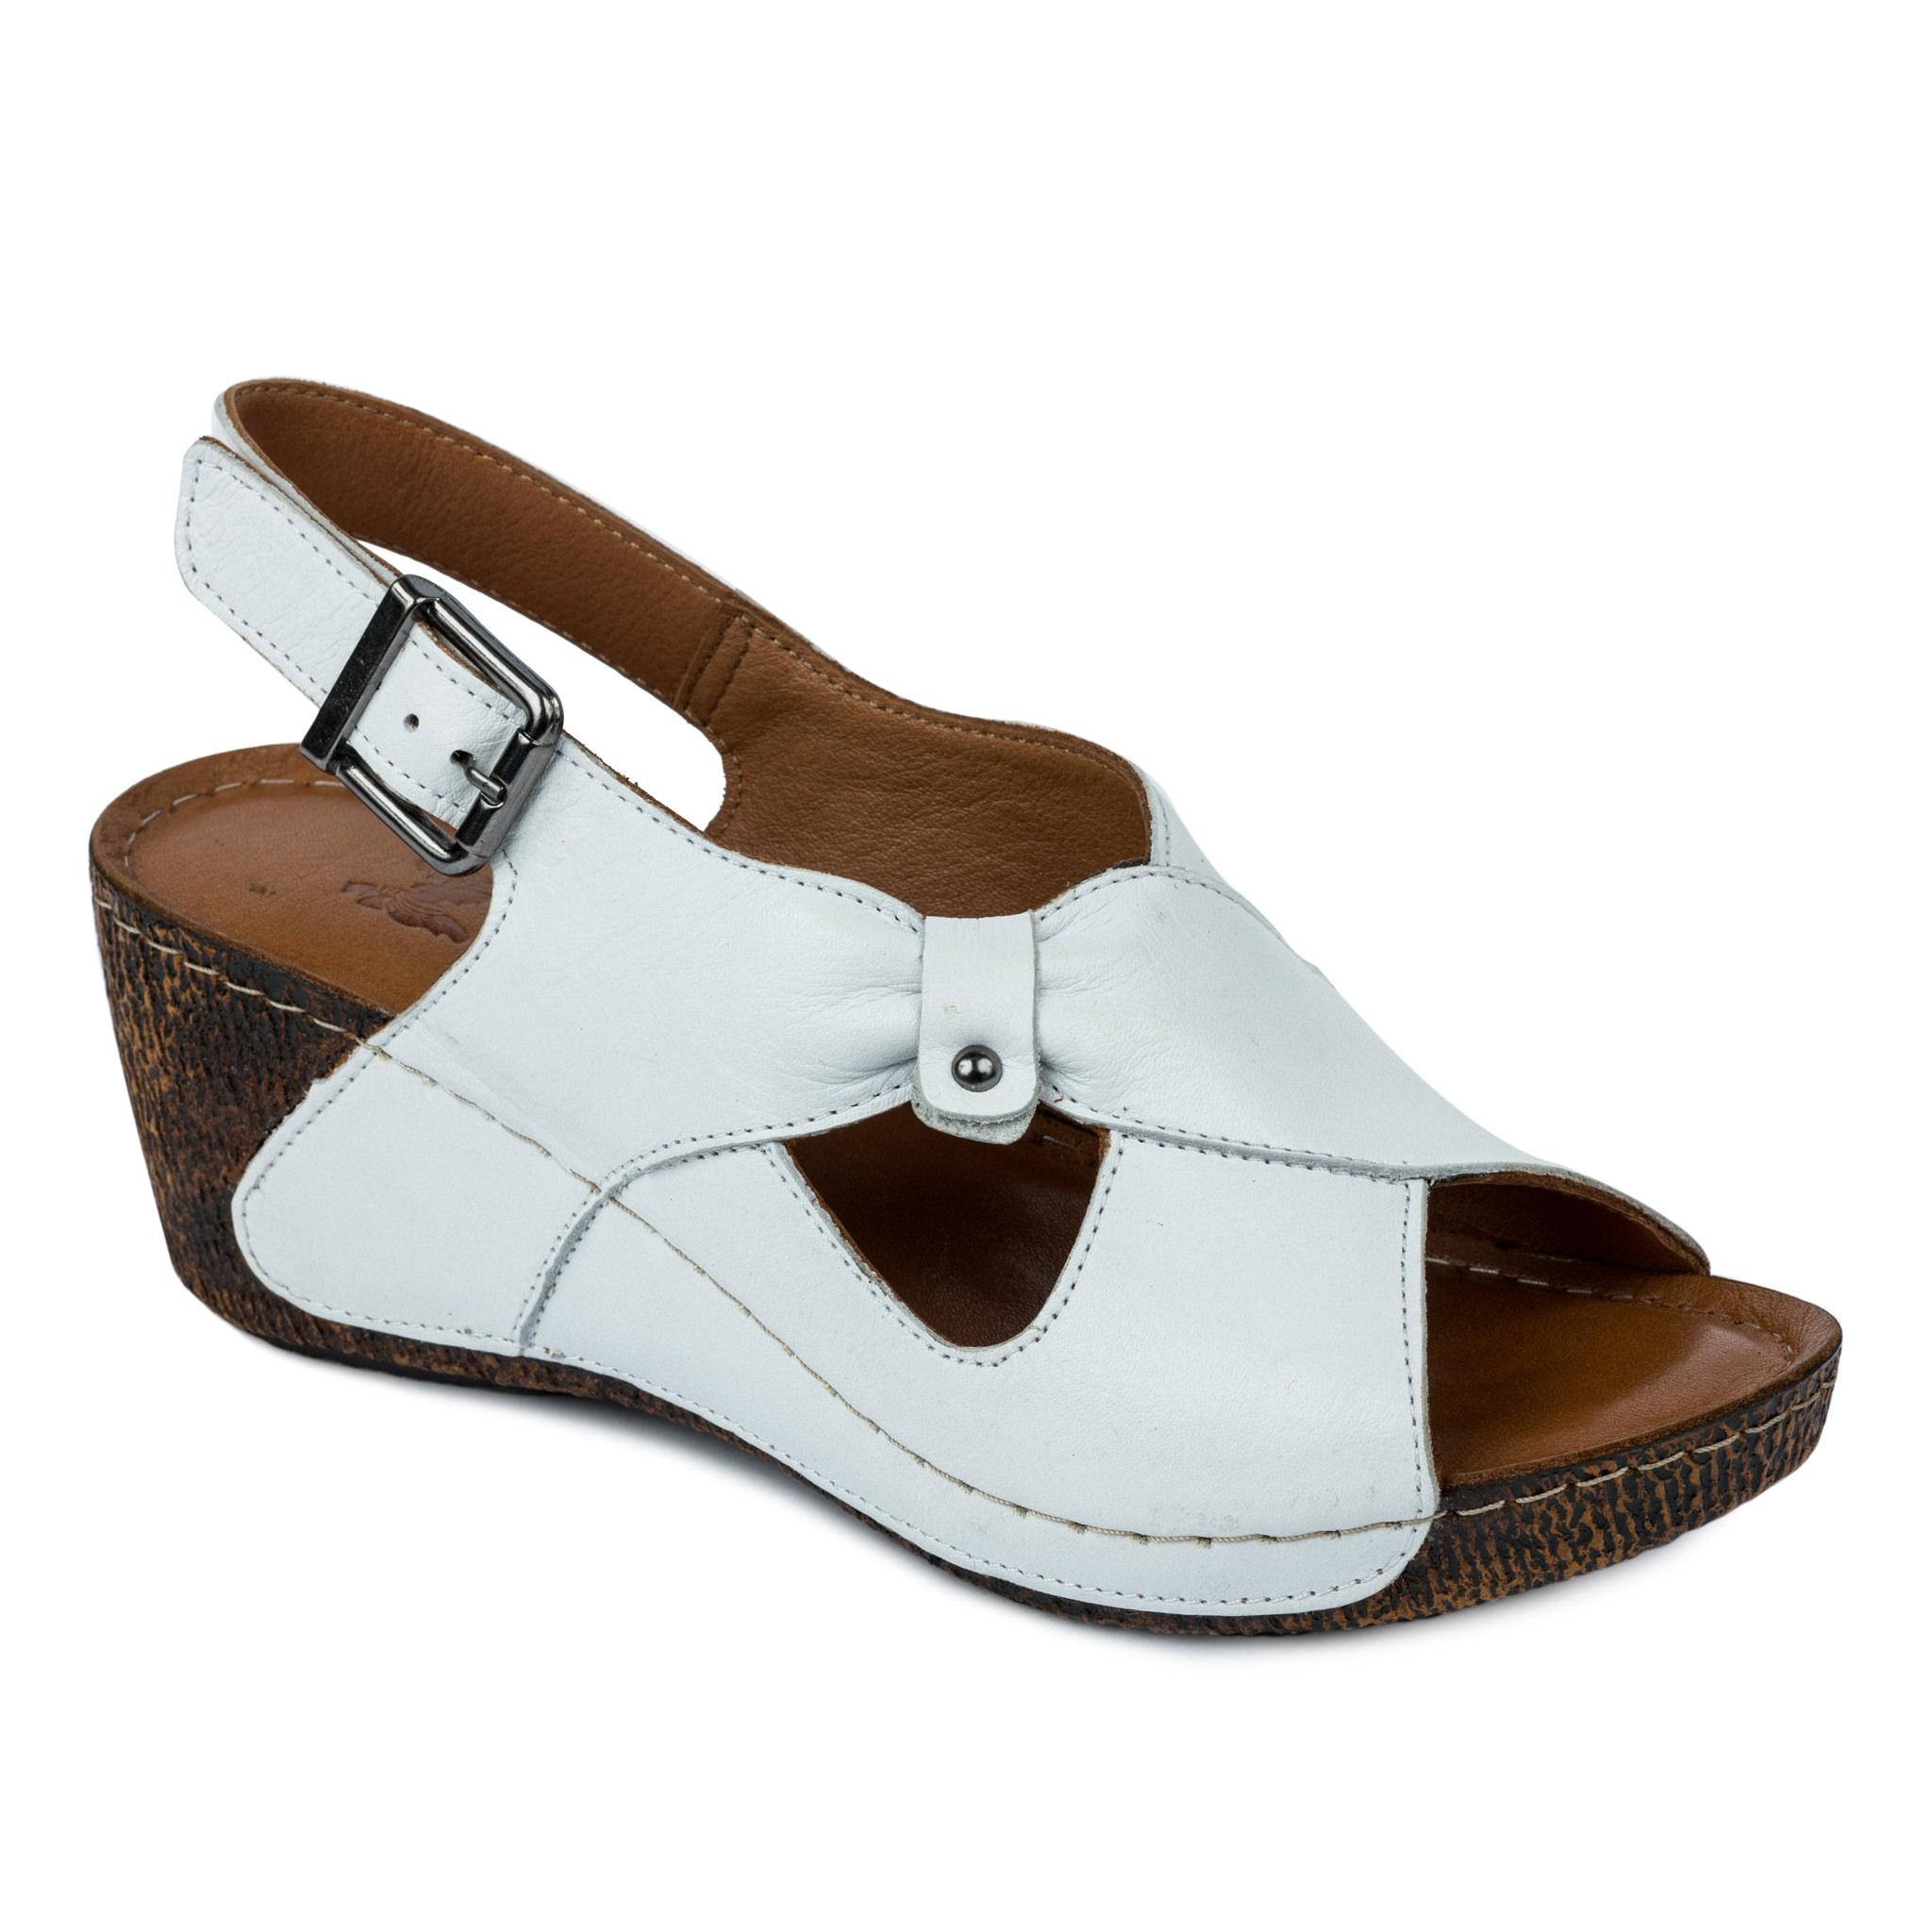 Women sandals A275 - WHITE